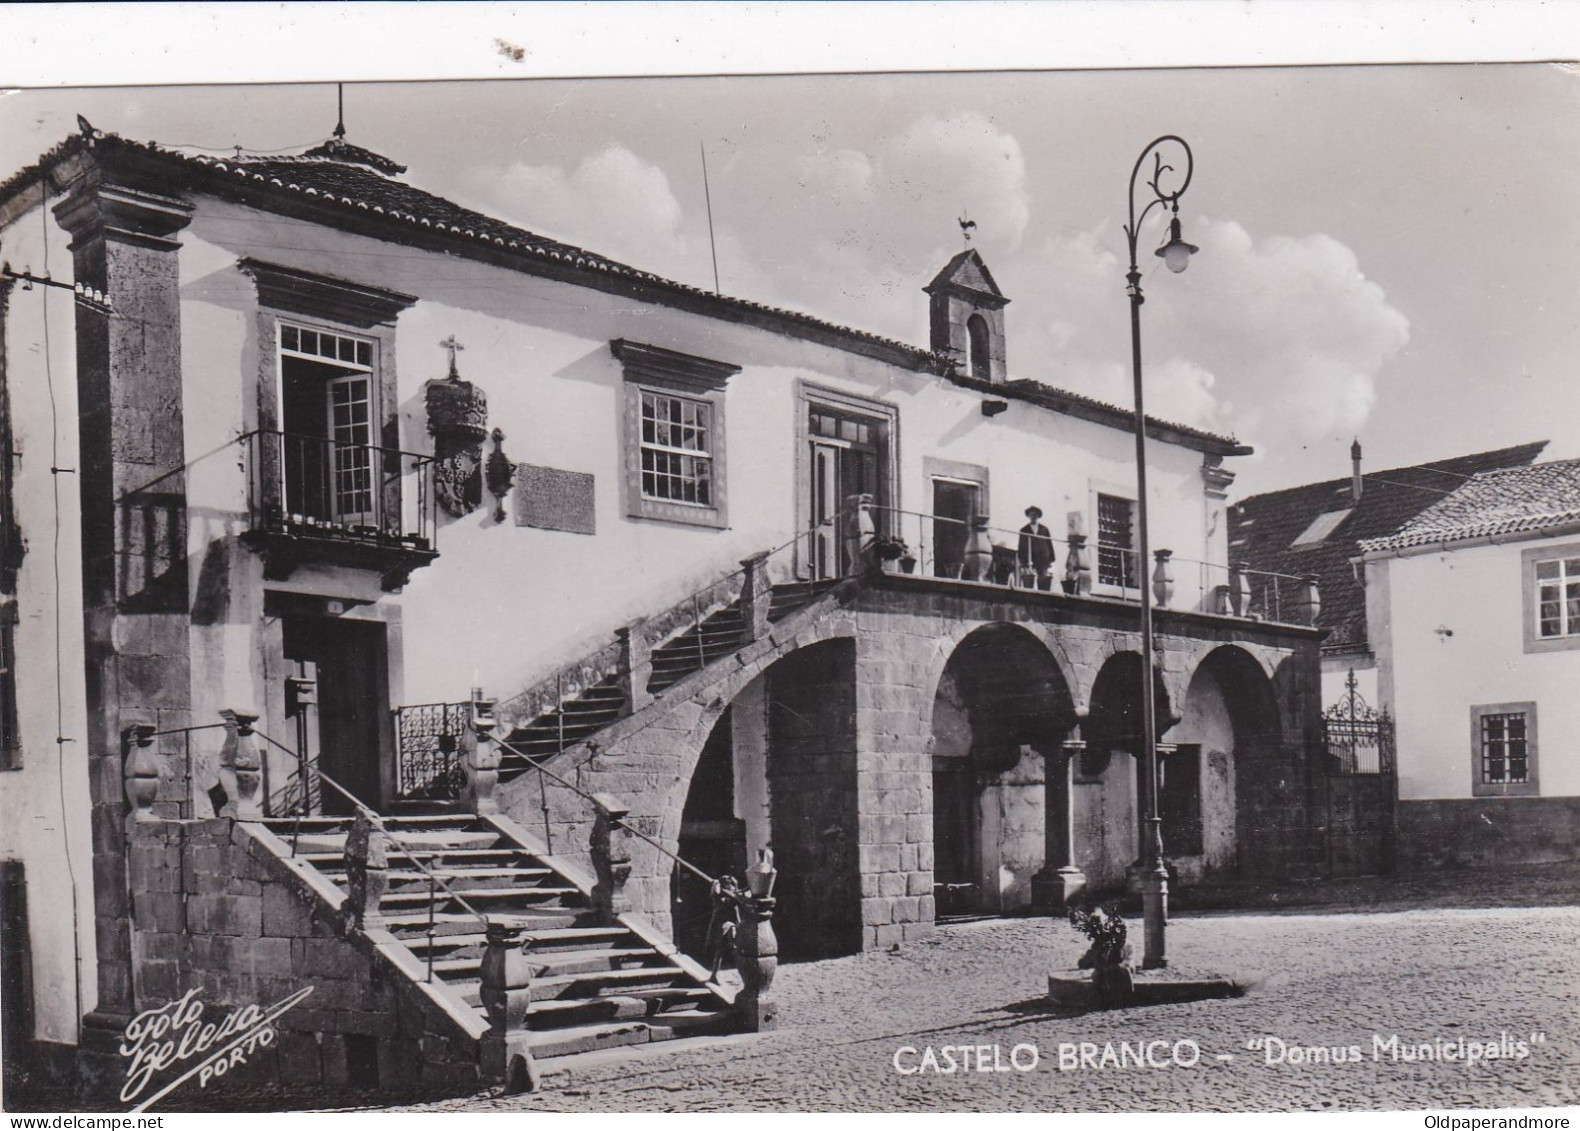 POSTCARD PORTUGAL - CASTELO BRANCO - DOMUS MUNICIPALIS - Castelo Branco